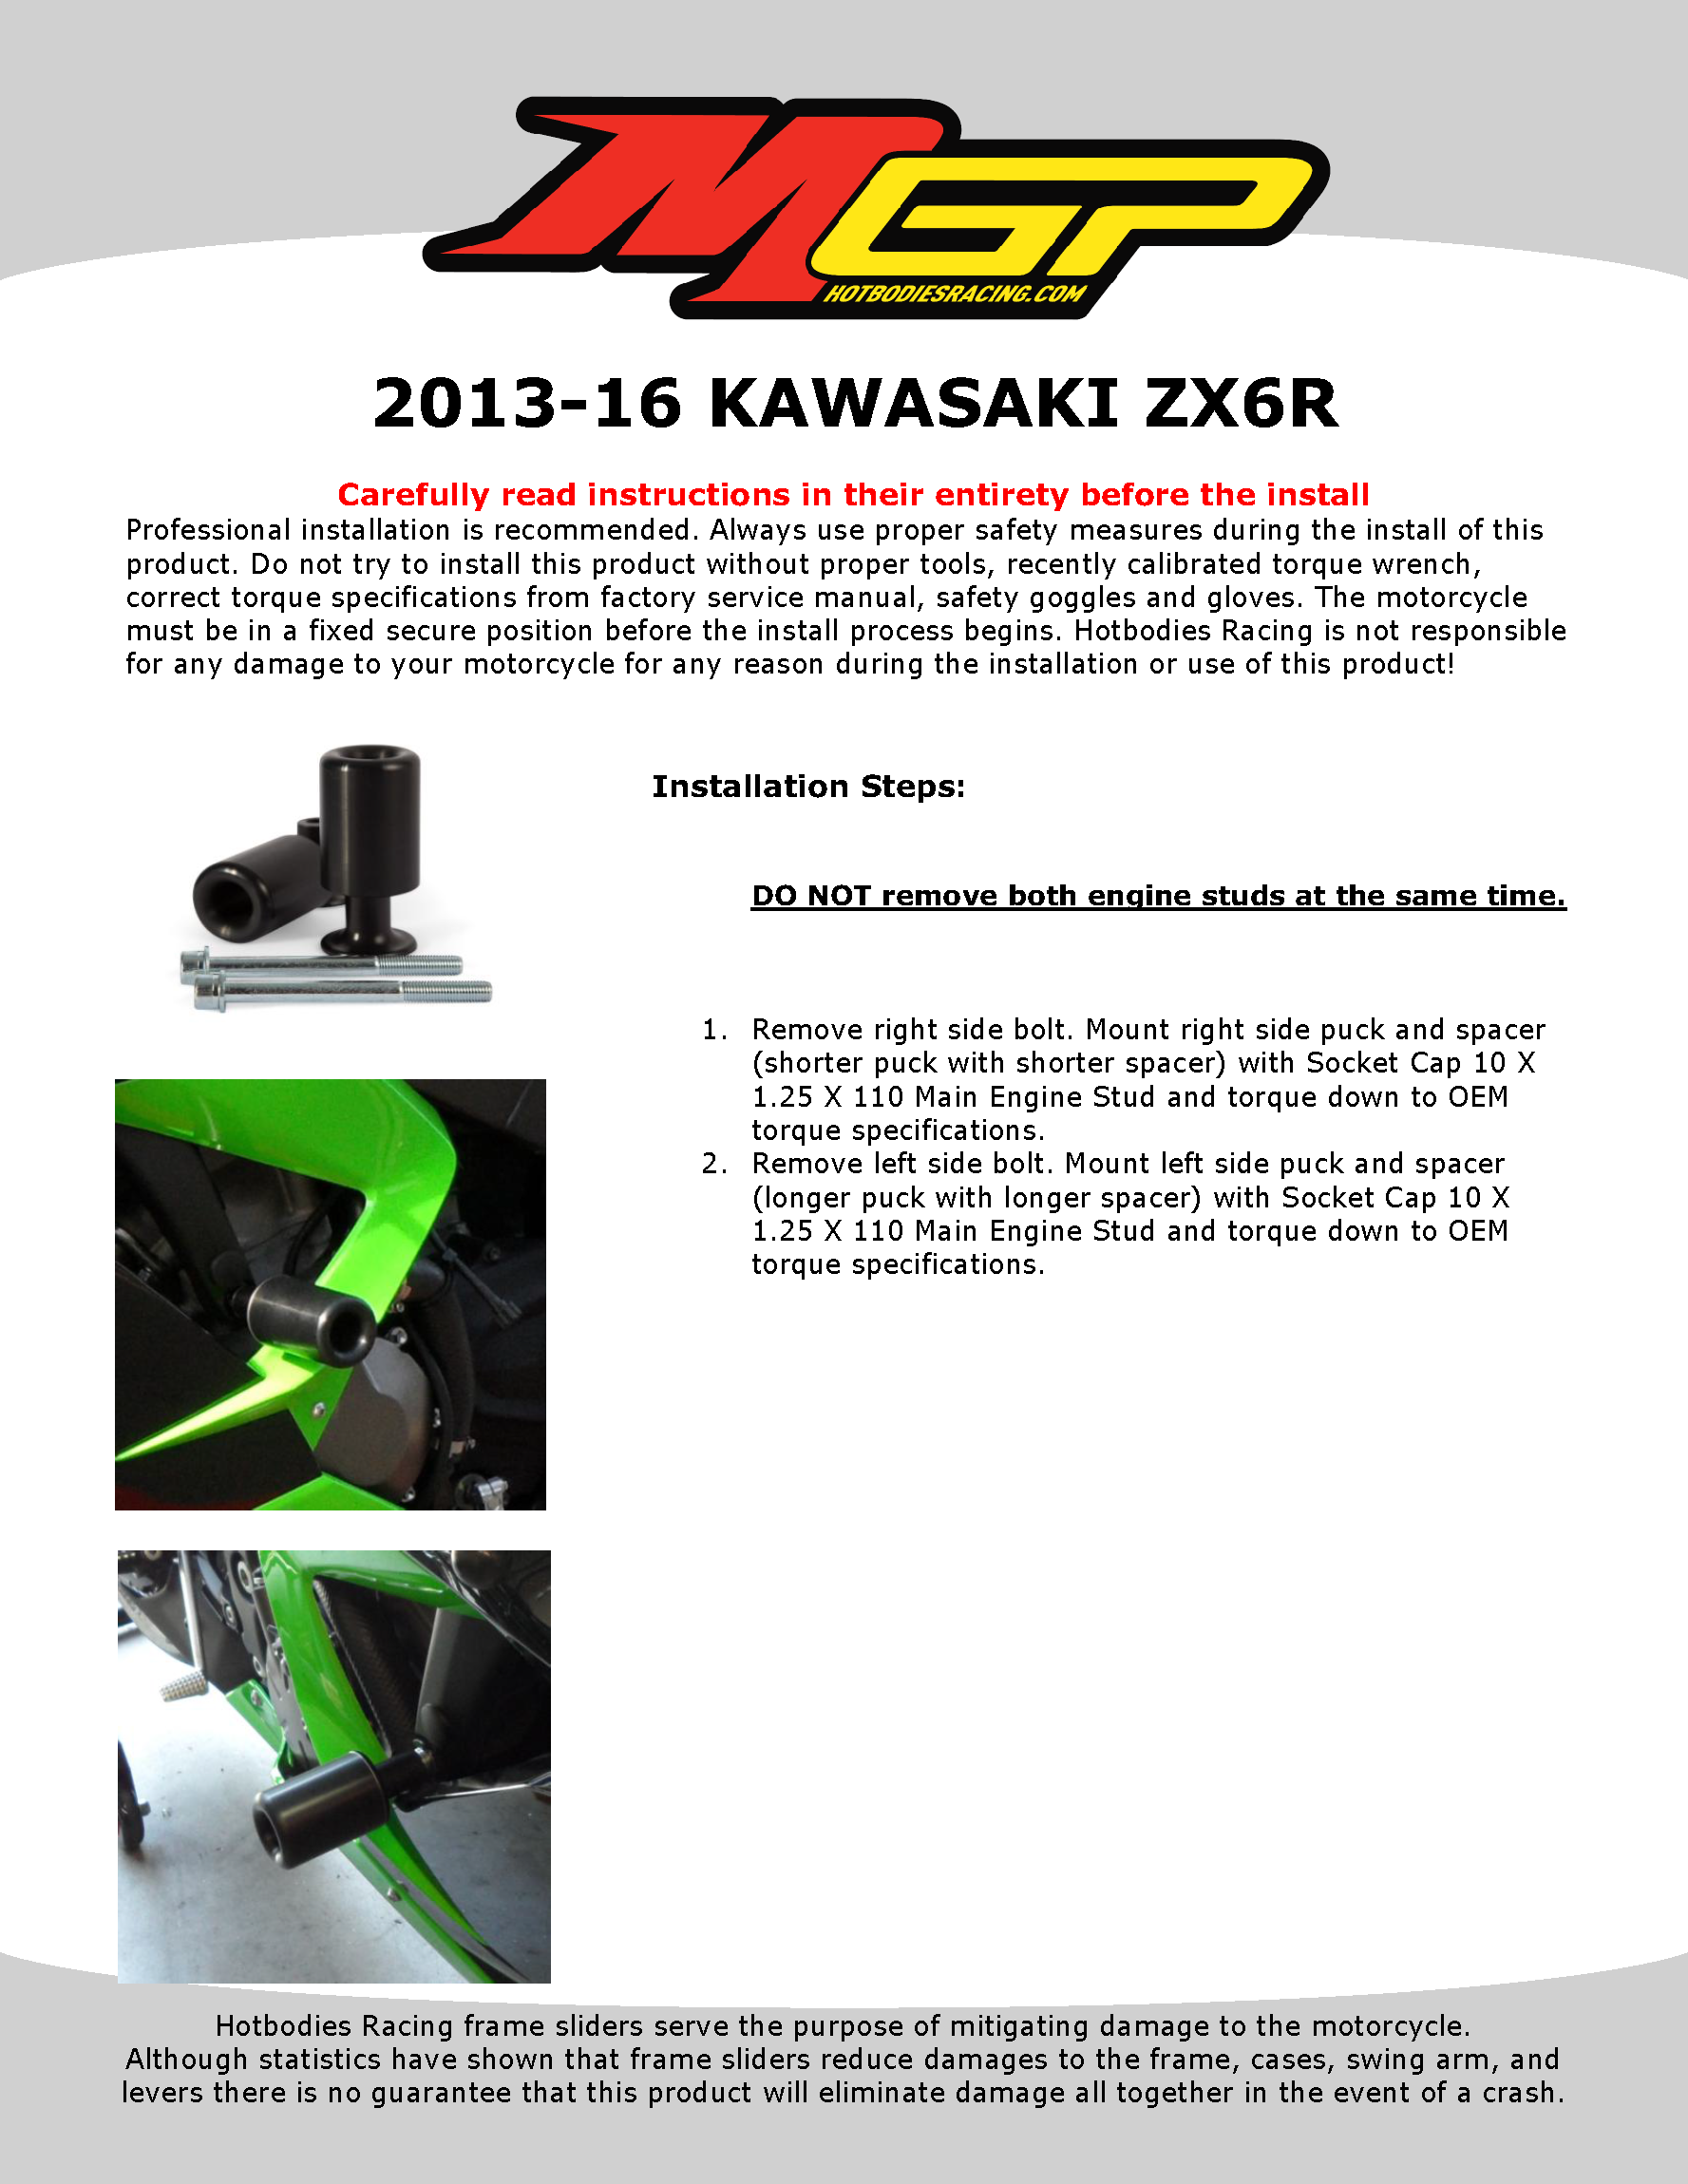 

2013-16 KAWASAKI ZX6R Frame Sliders Installation

